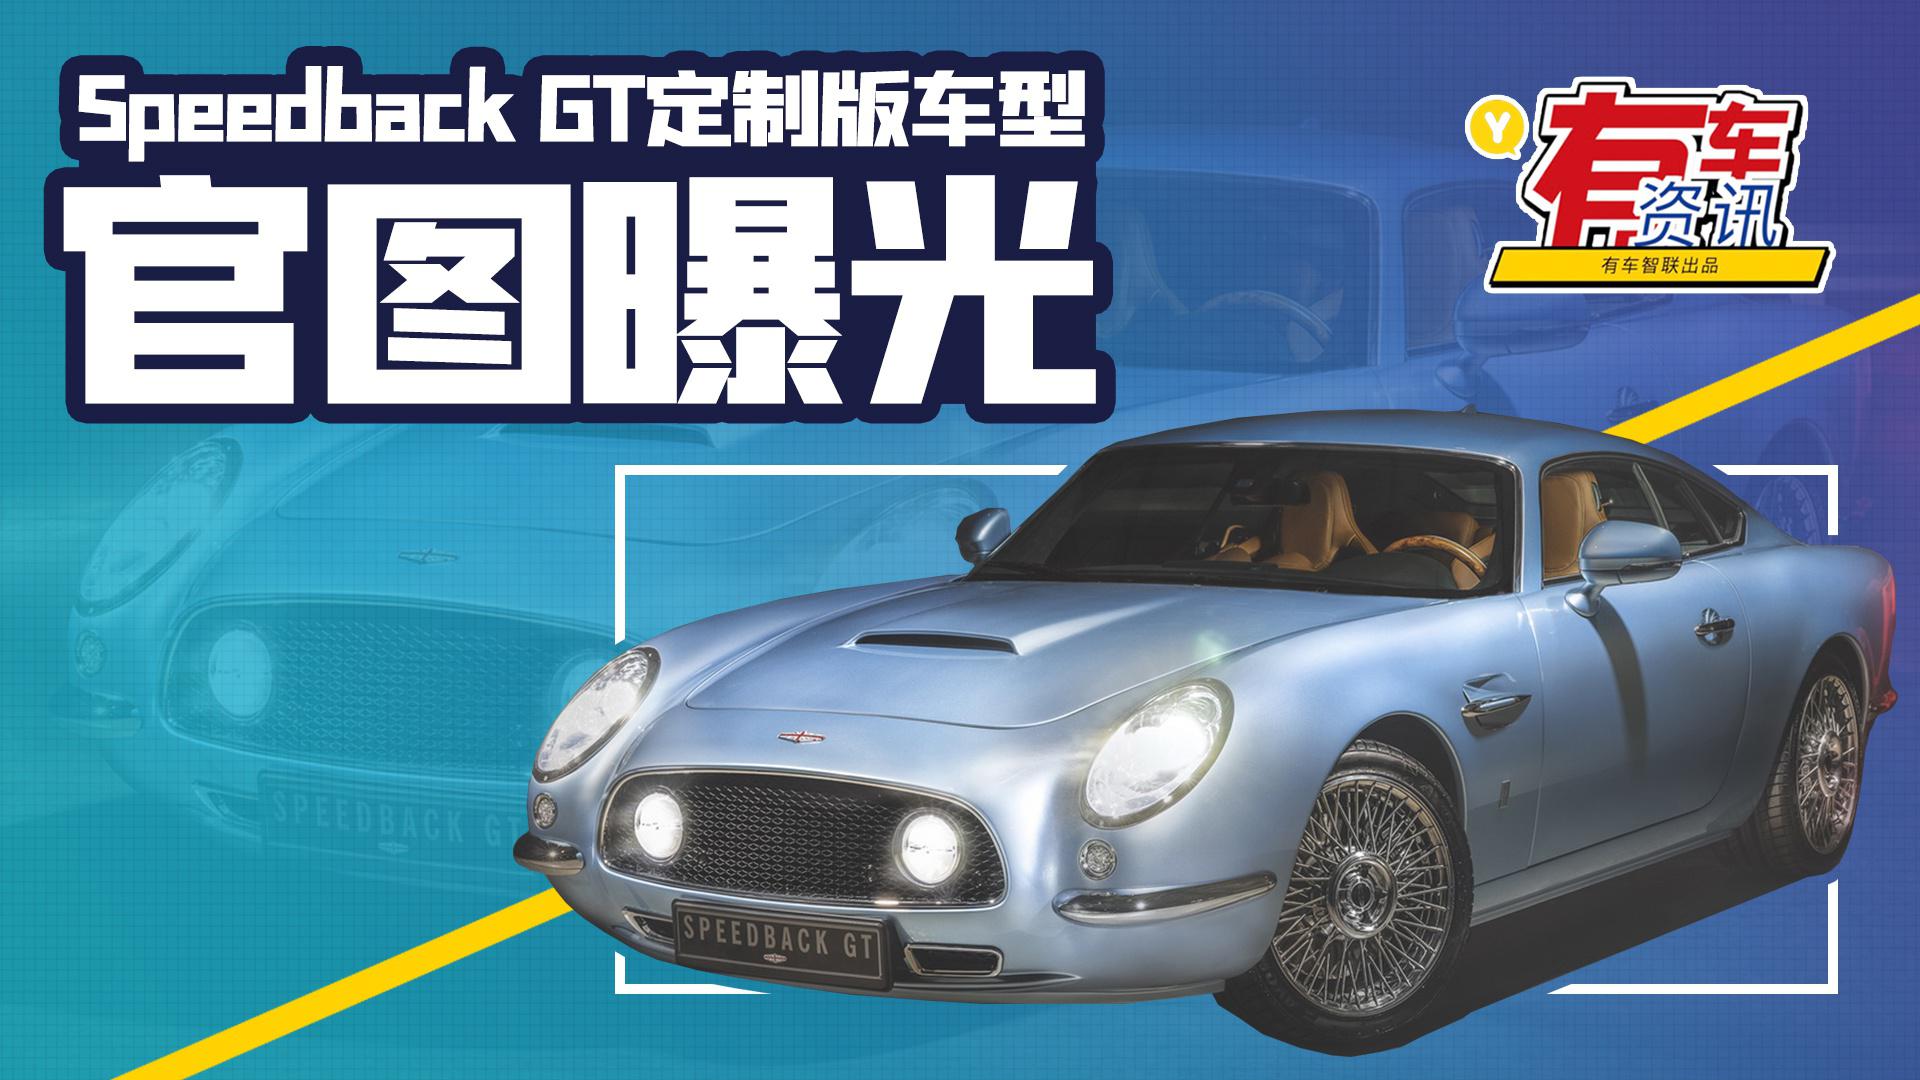 Speedback GT定制版车型官图曝光 0-96公里/小时加速仅4.6秒